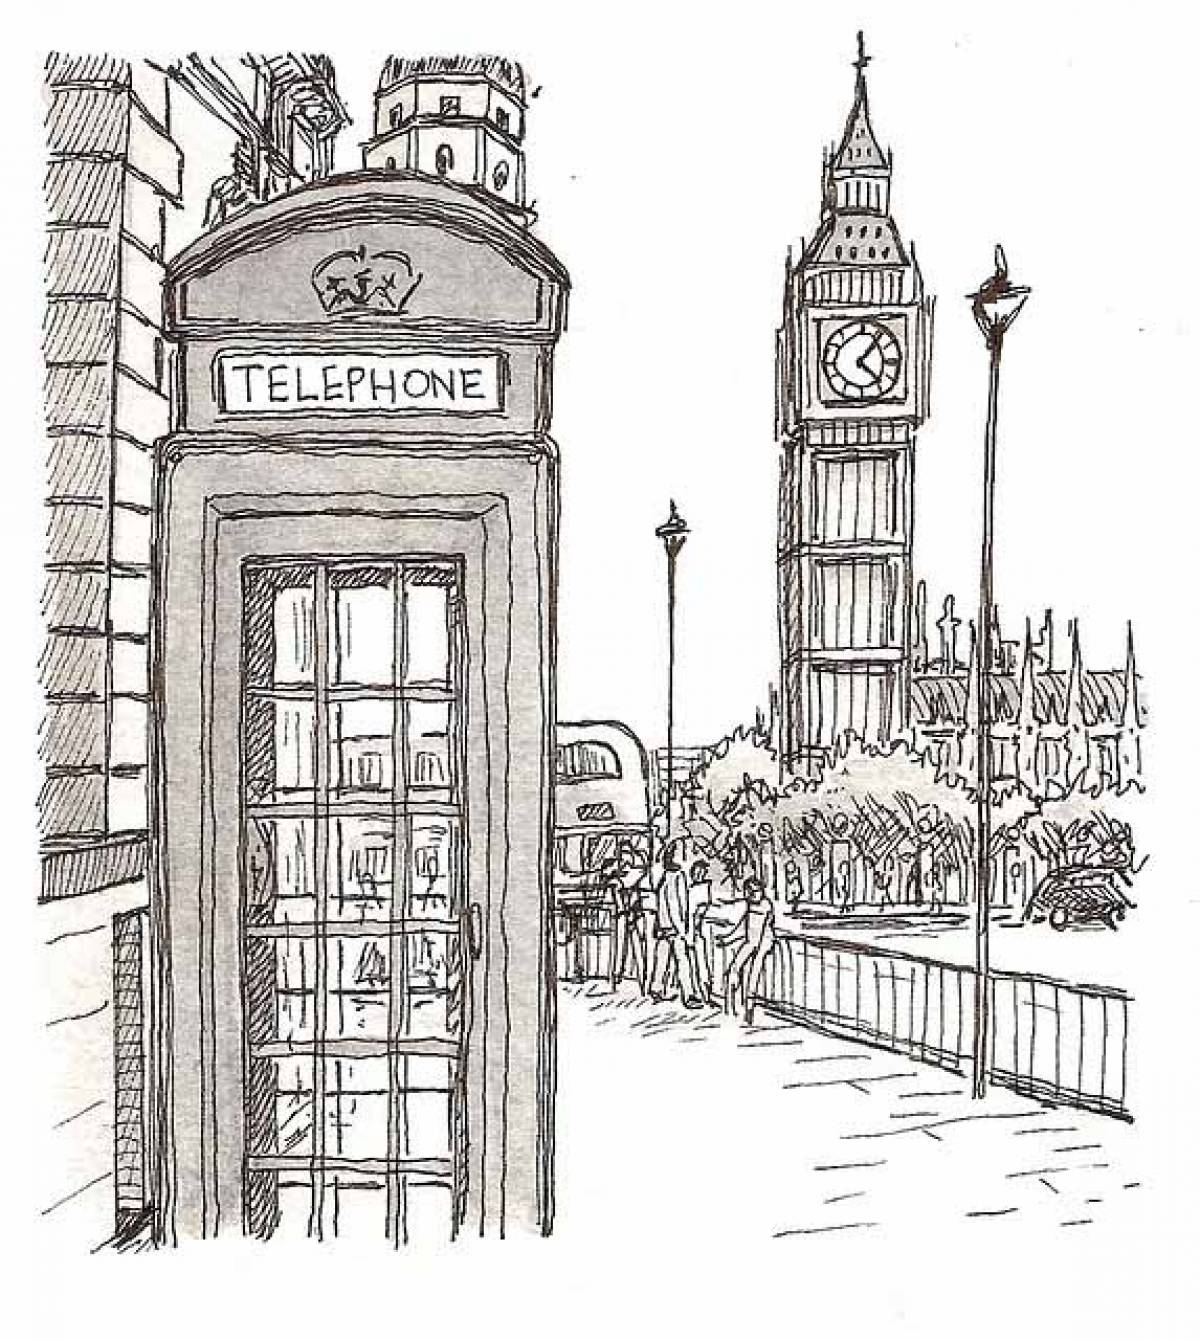 London. Phone booth